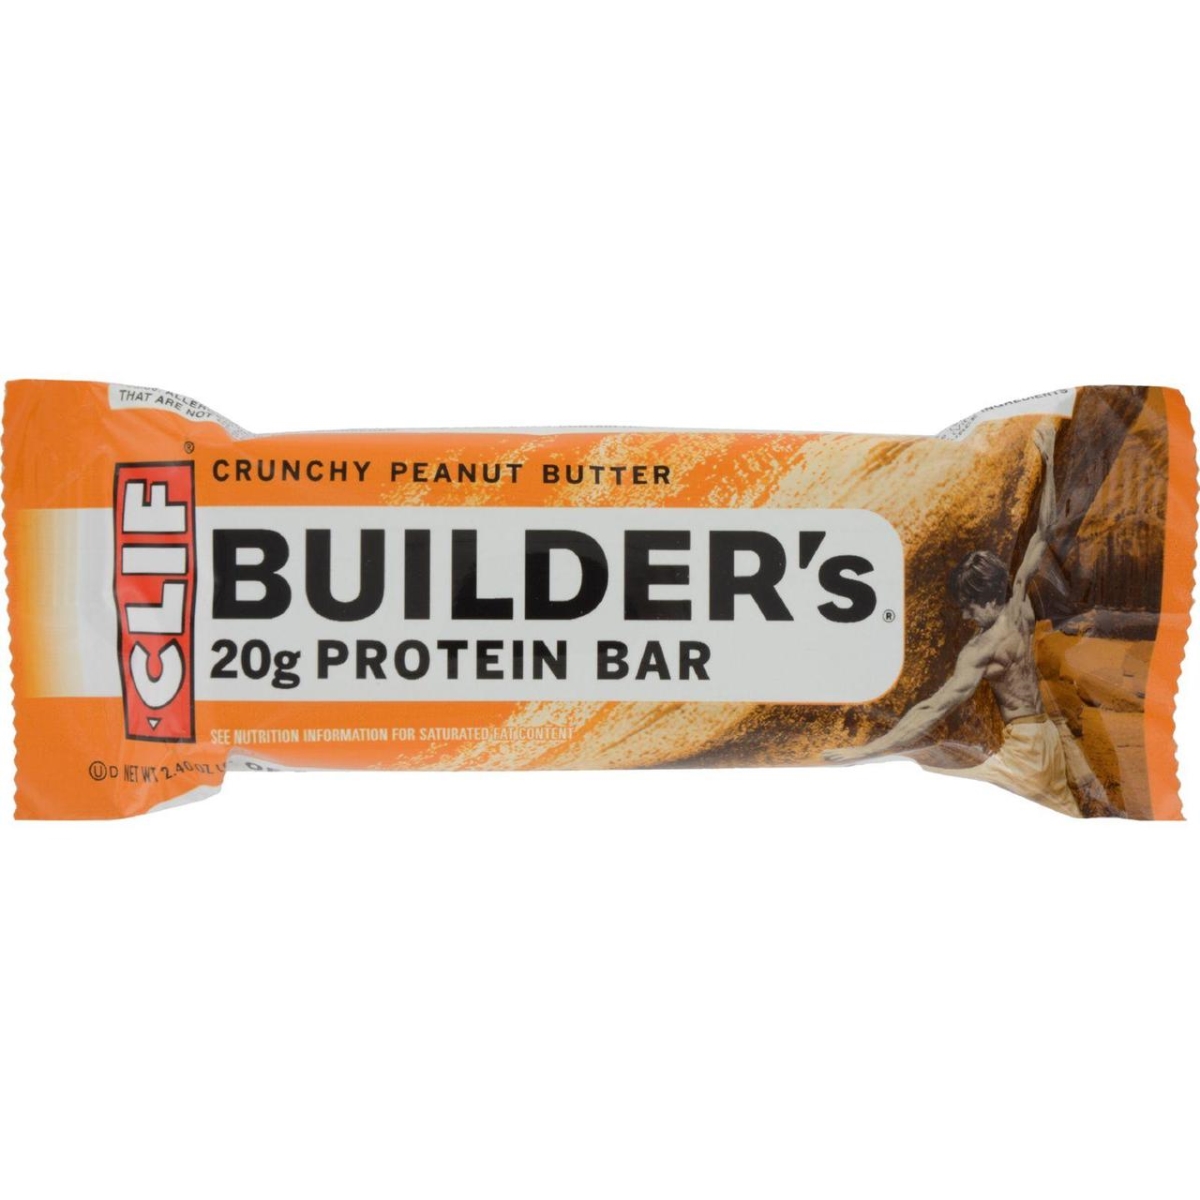 Clif Bar Hg1082940 2.4 Oz Crunchy Peanut Butter Builder Bar - Case Of 12